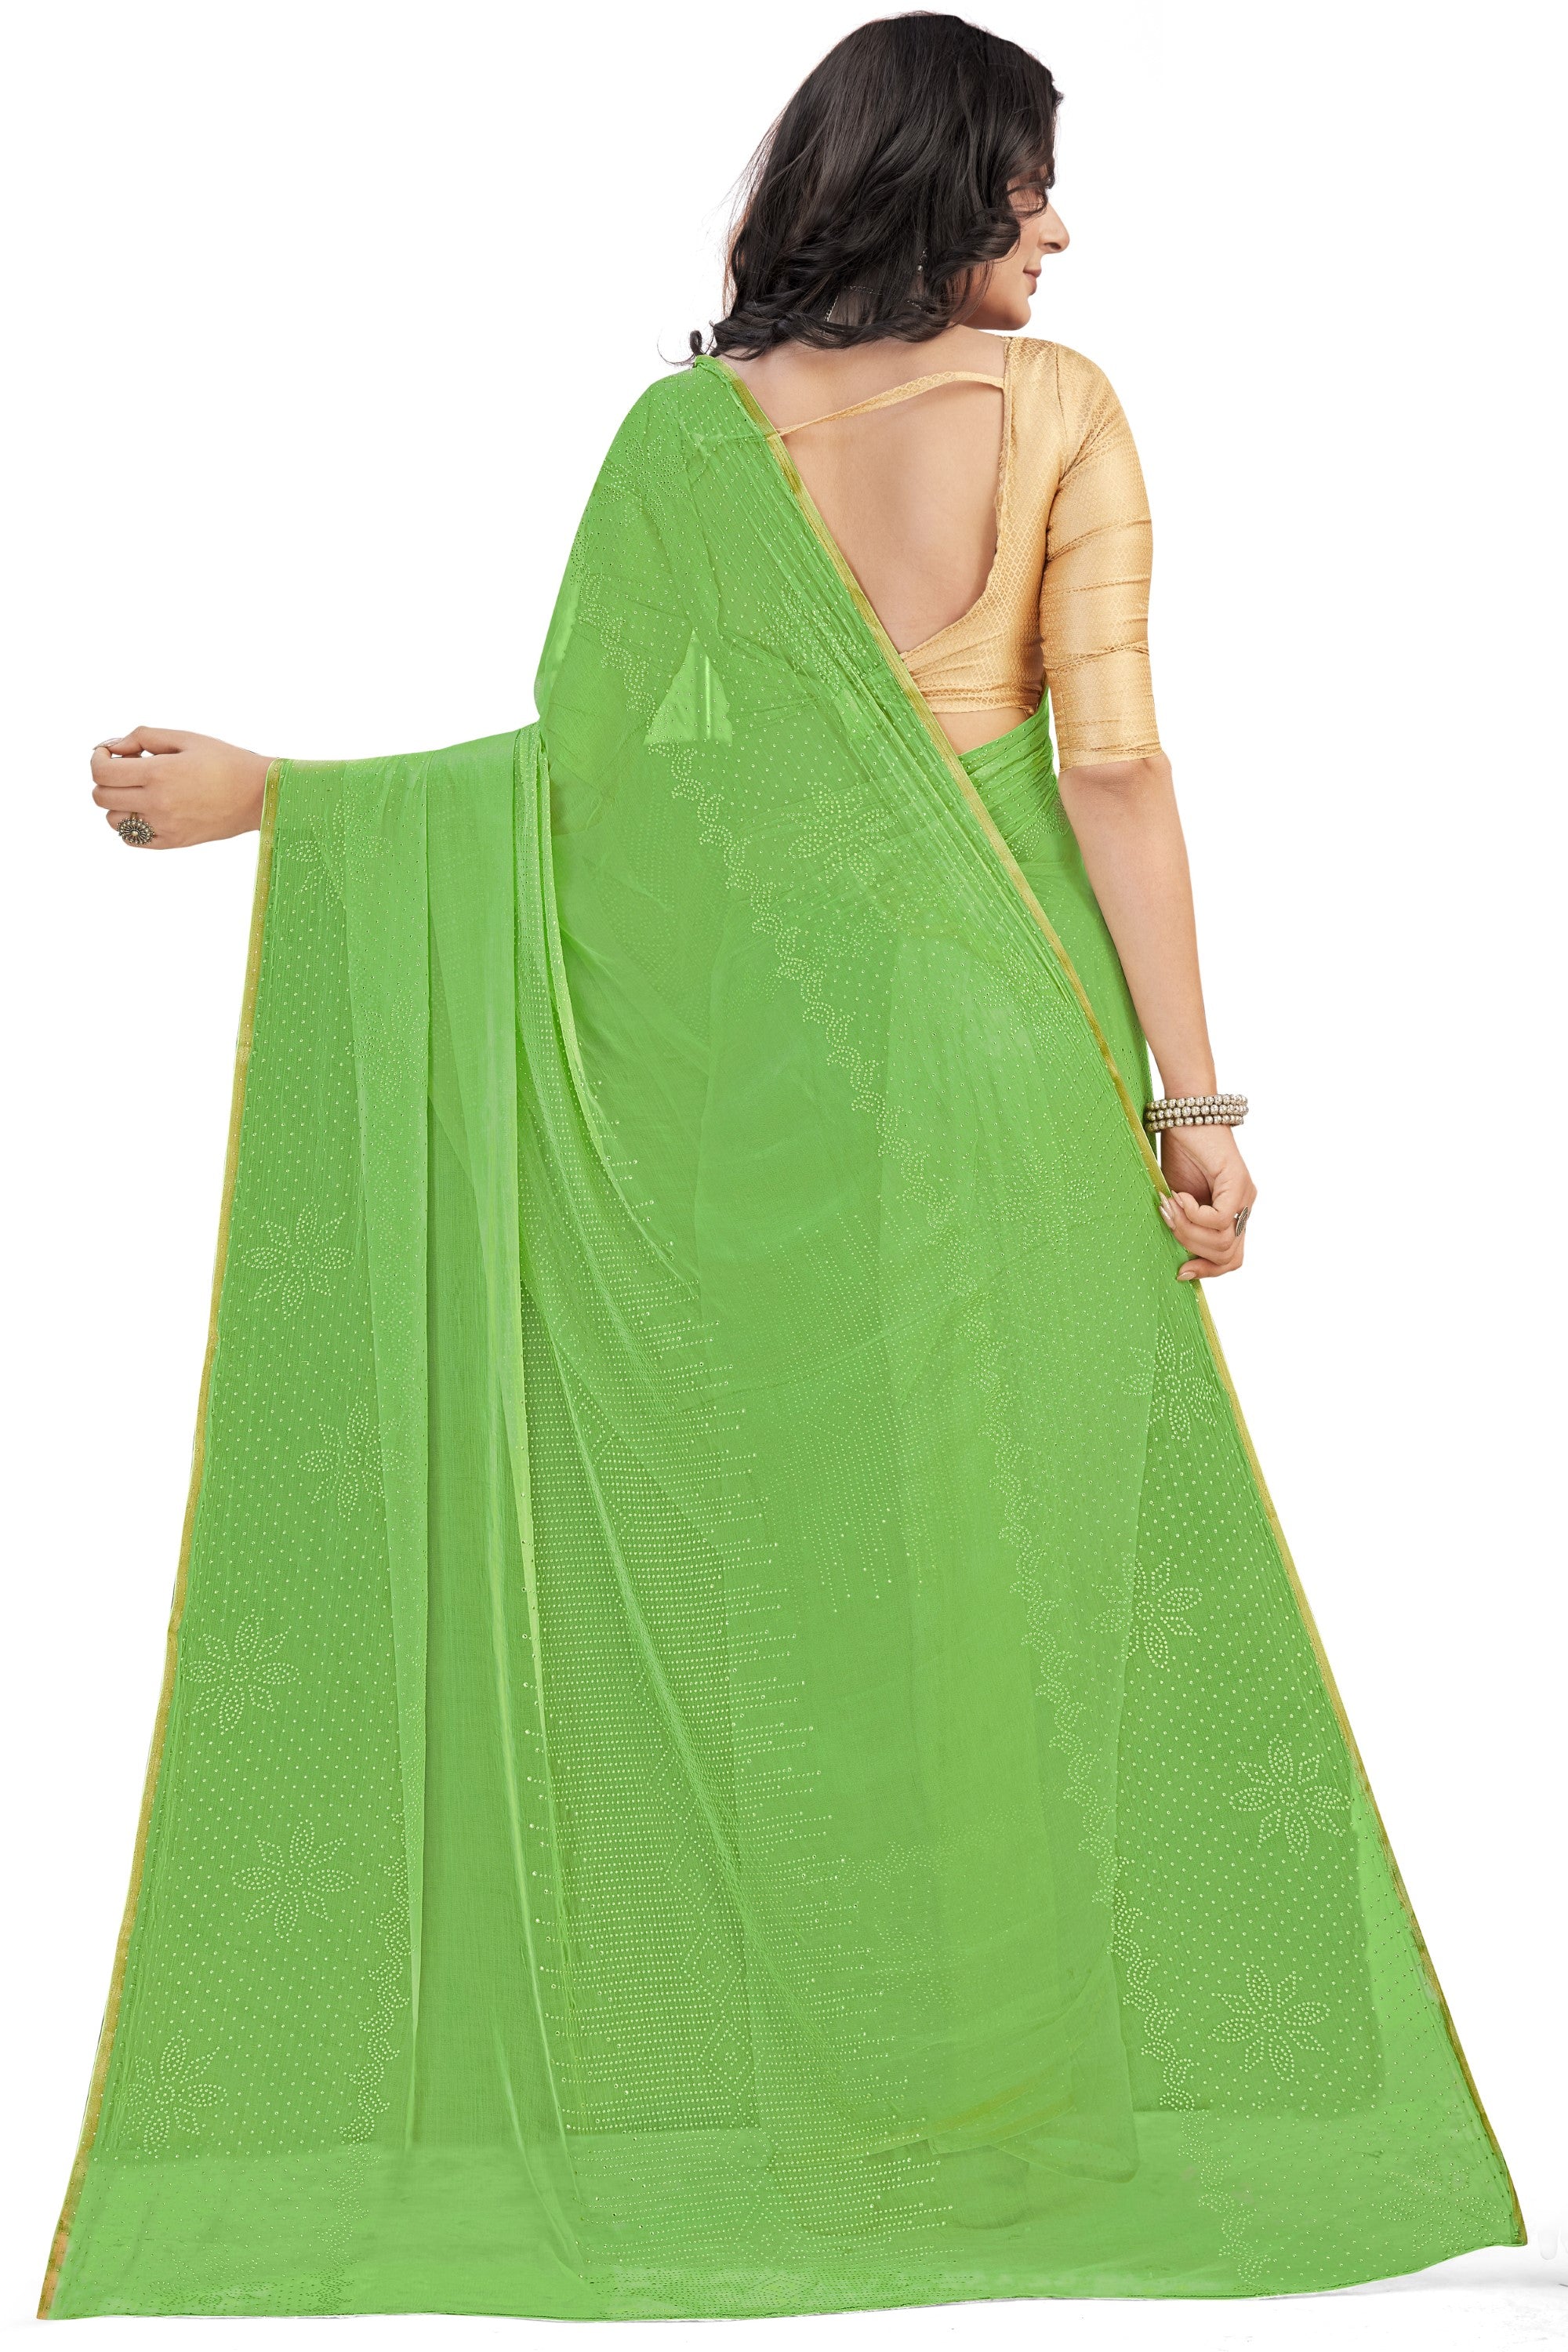 Women's Bandhani Daily Wear Chiffon Sari With Blouse Piece (Parrot Green) - NIMIDHYA